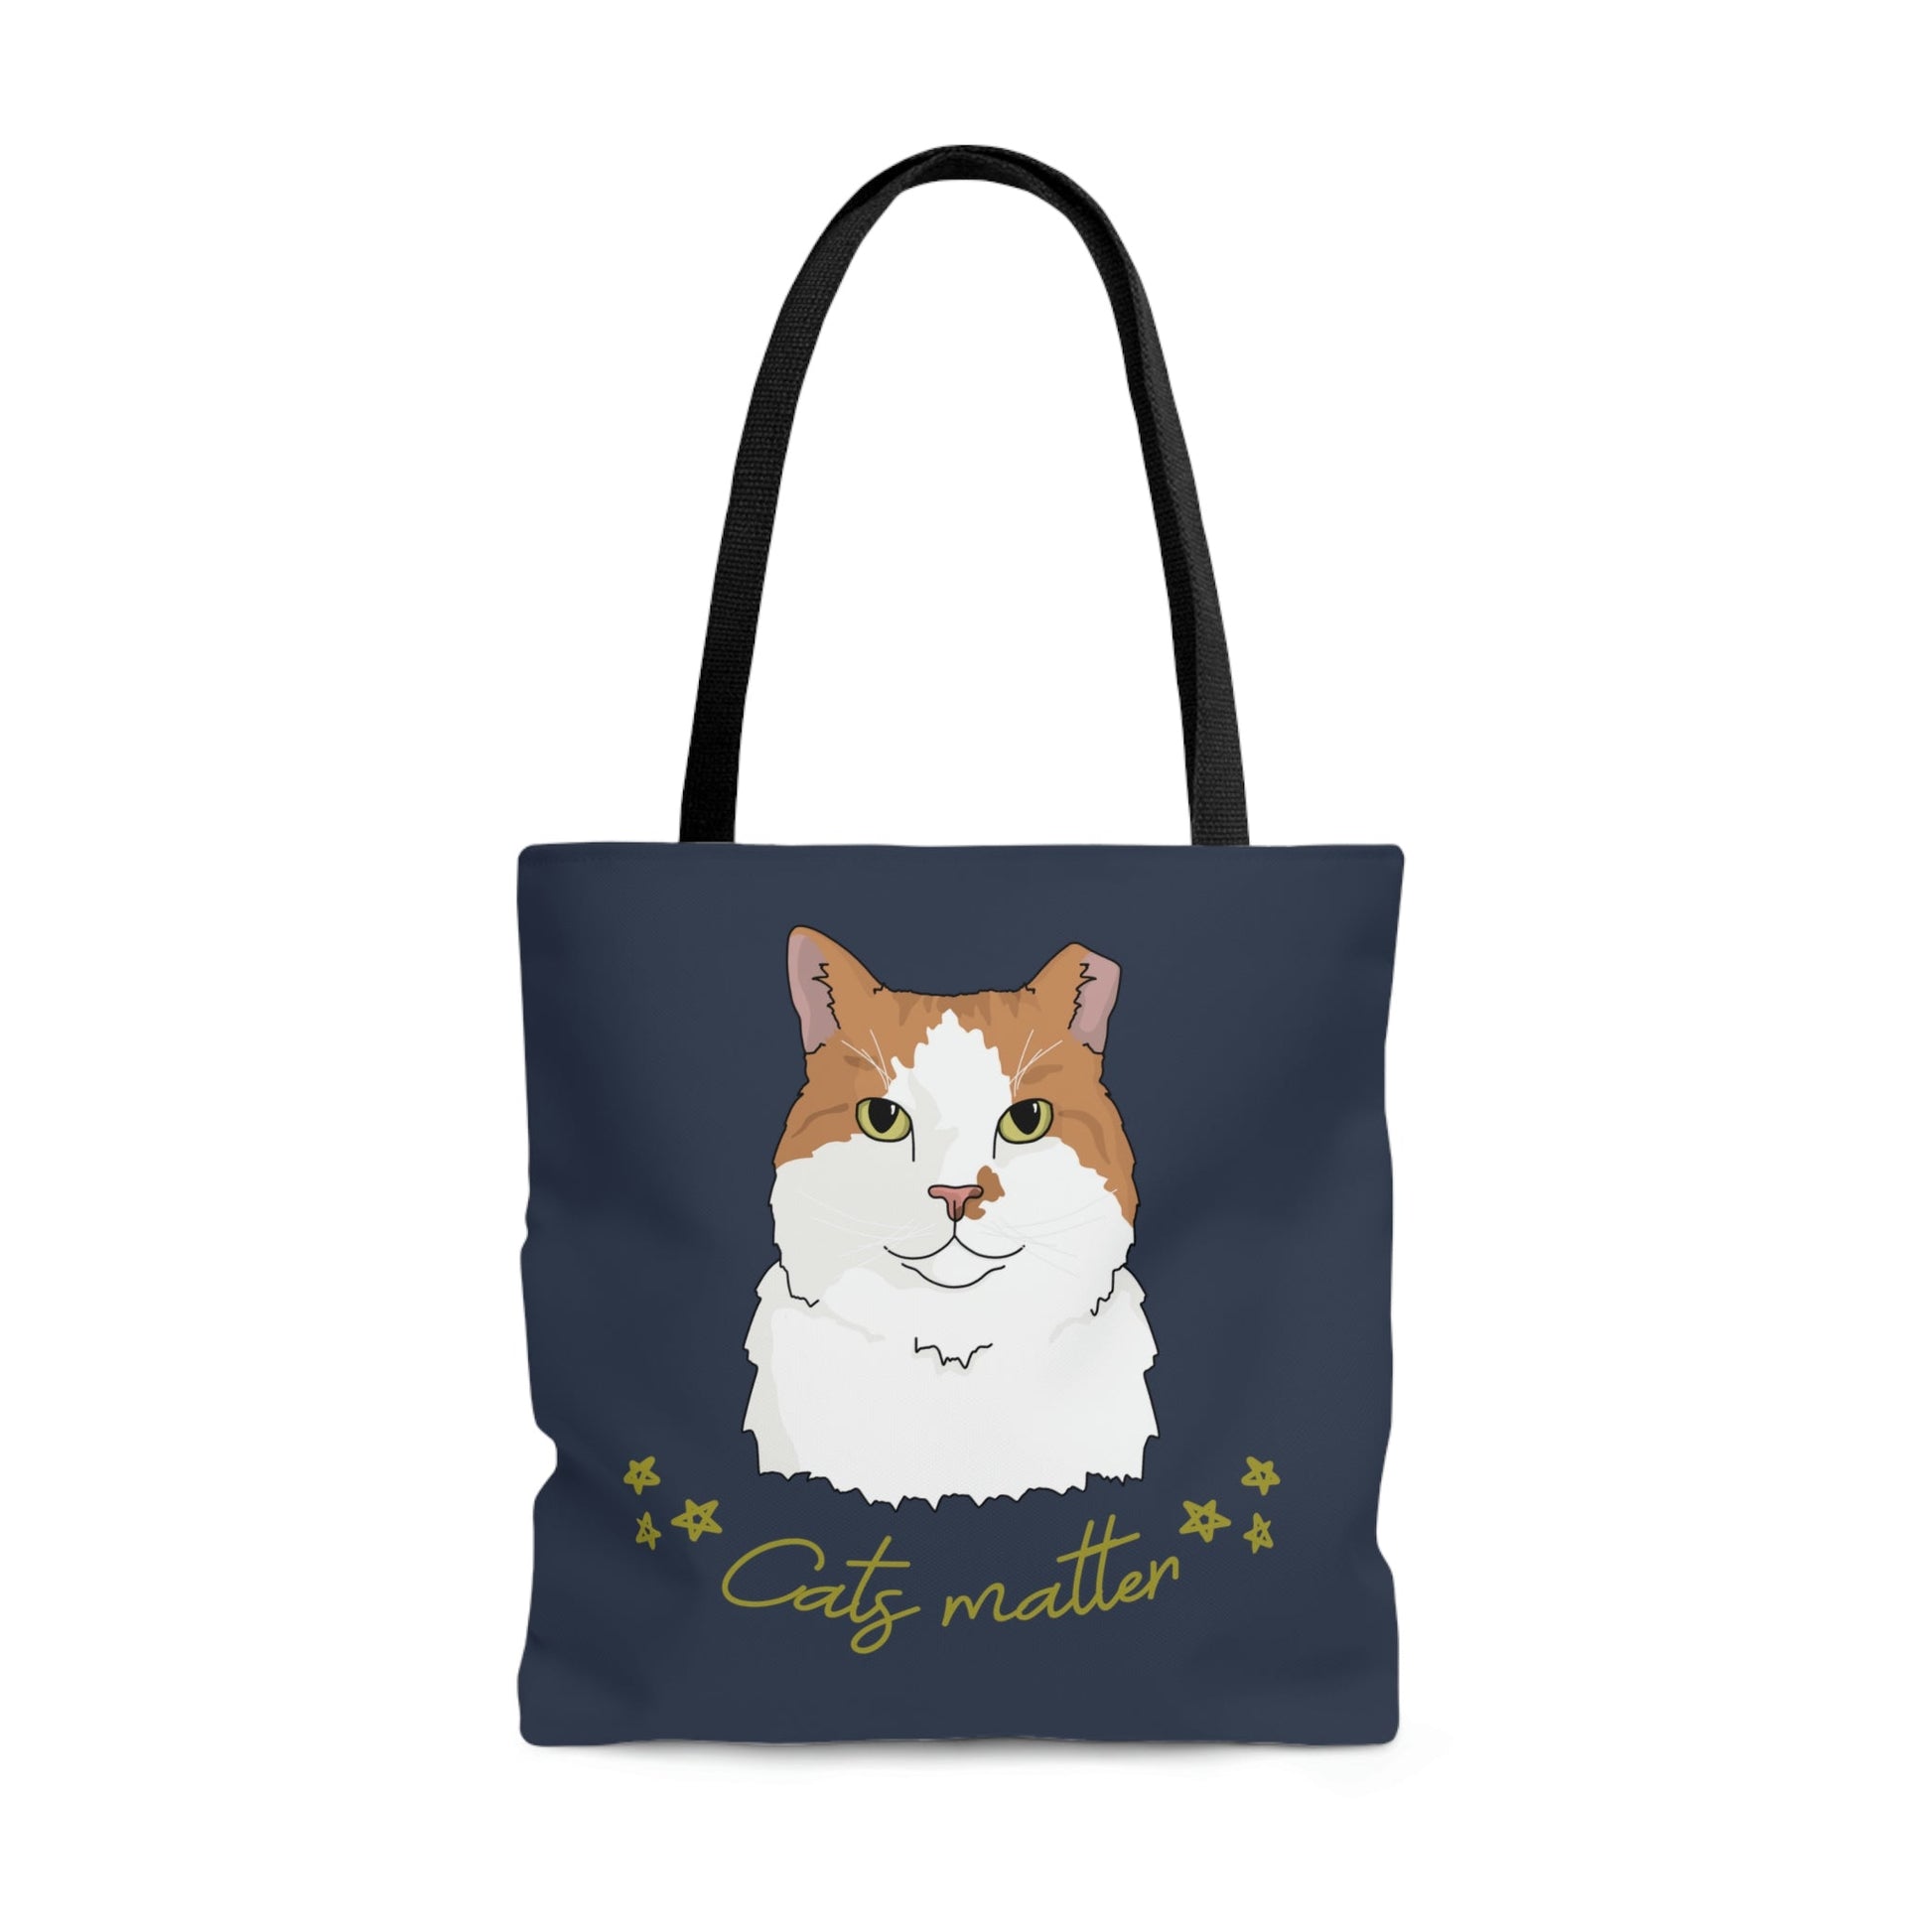 Cats Matter | Tote Bag - Detezi Designs-14197900365875471072